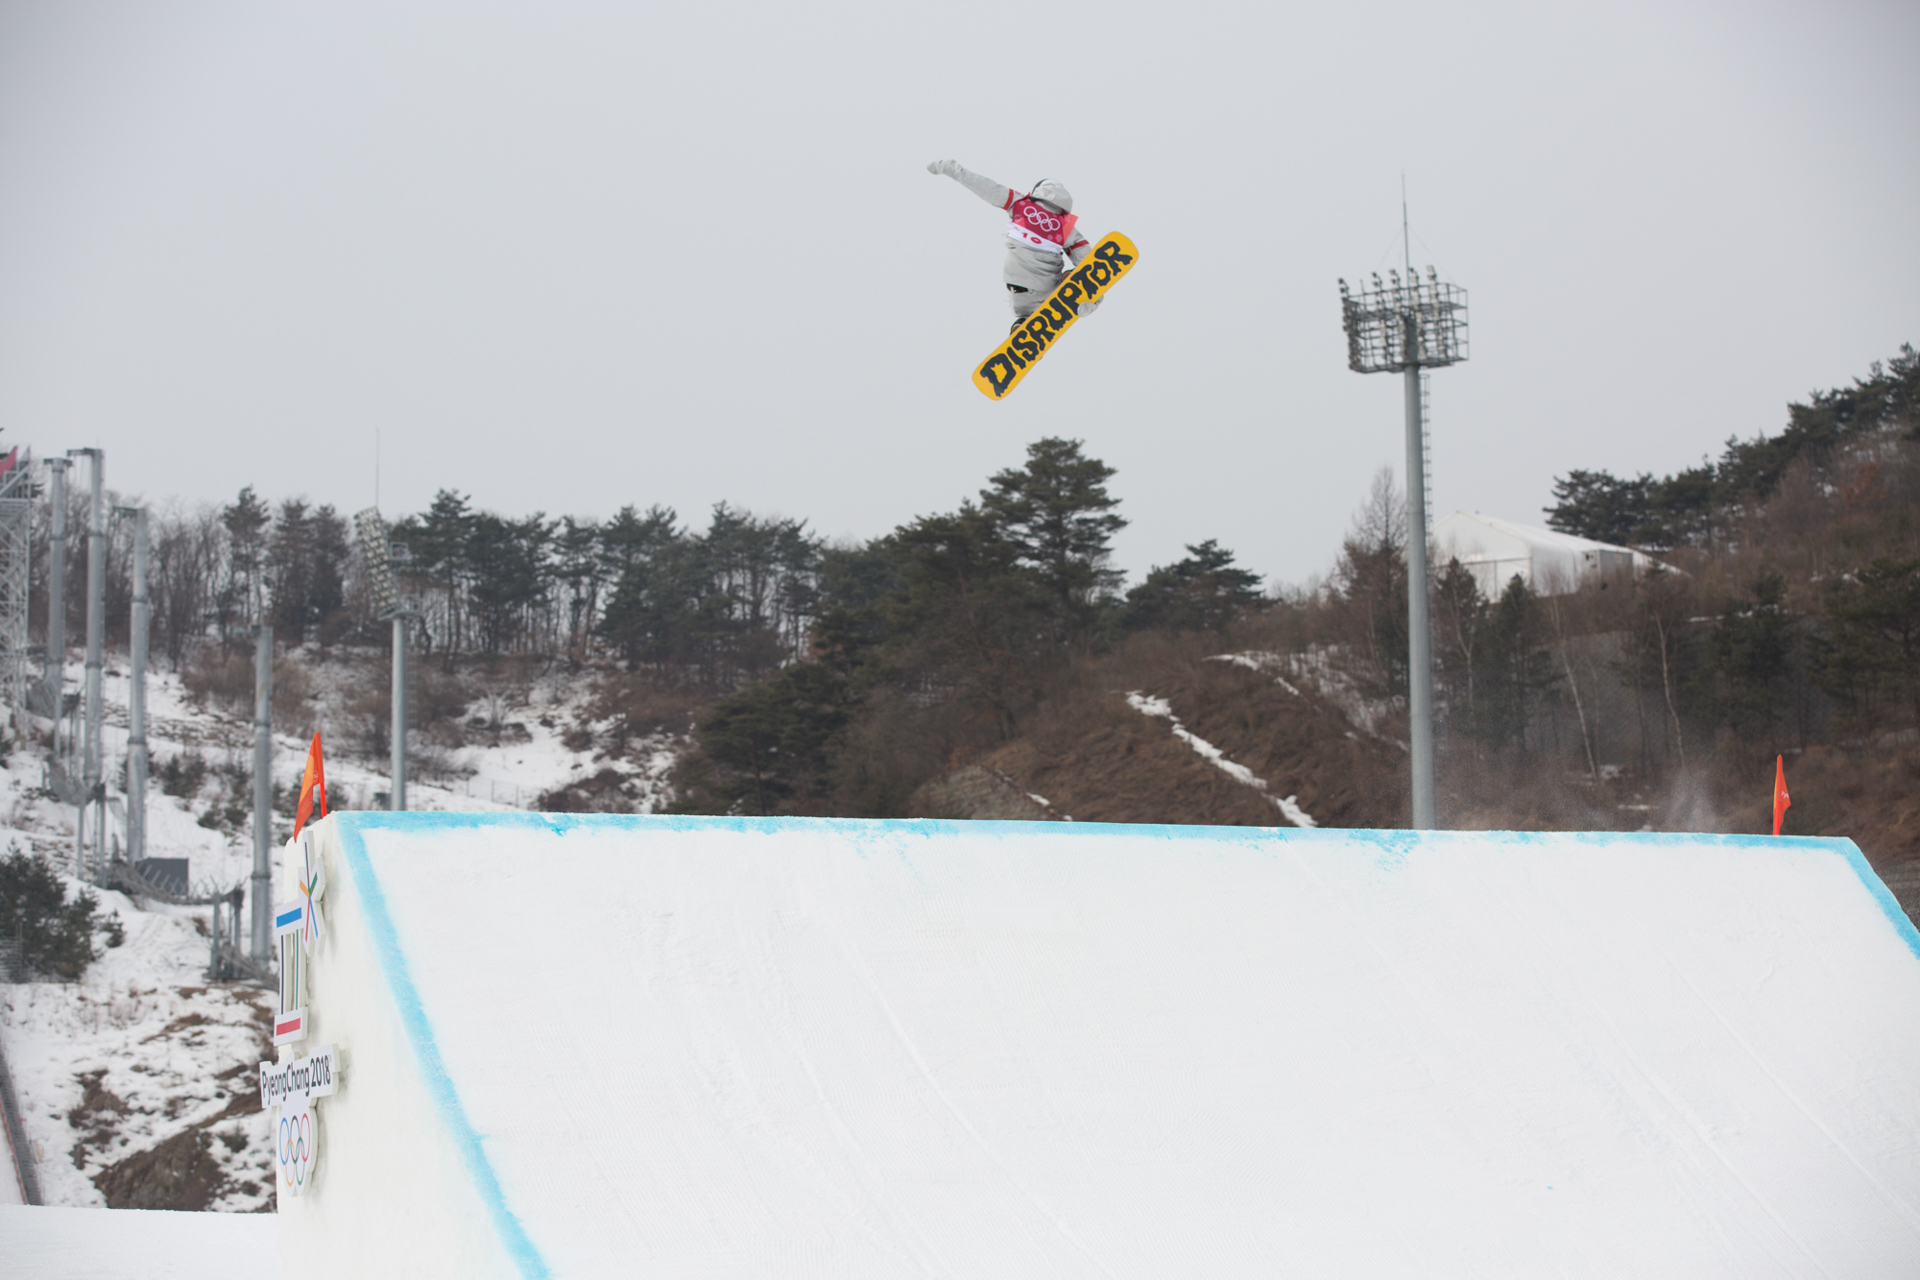 Kyle Mack in snowboard Big Air at the 2018 Olympics in Pyeongchang